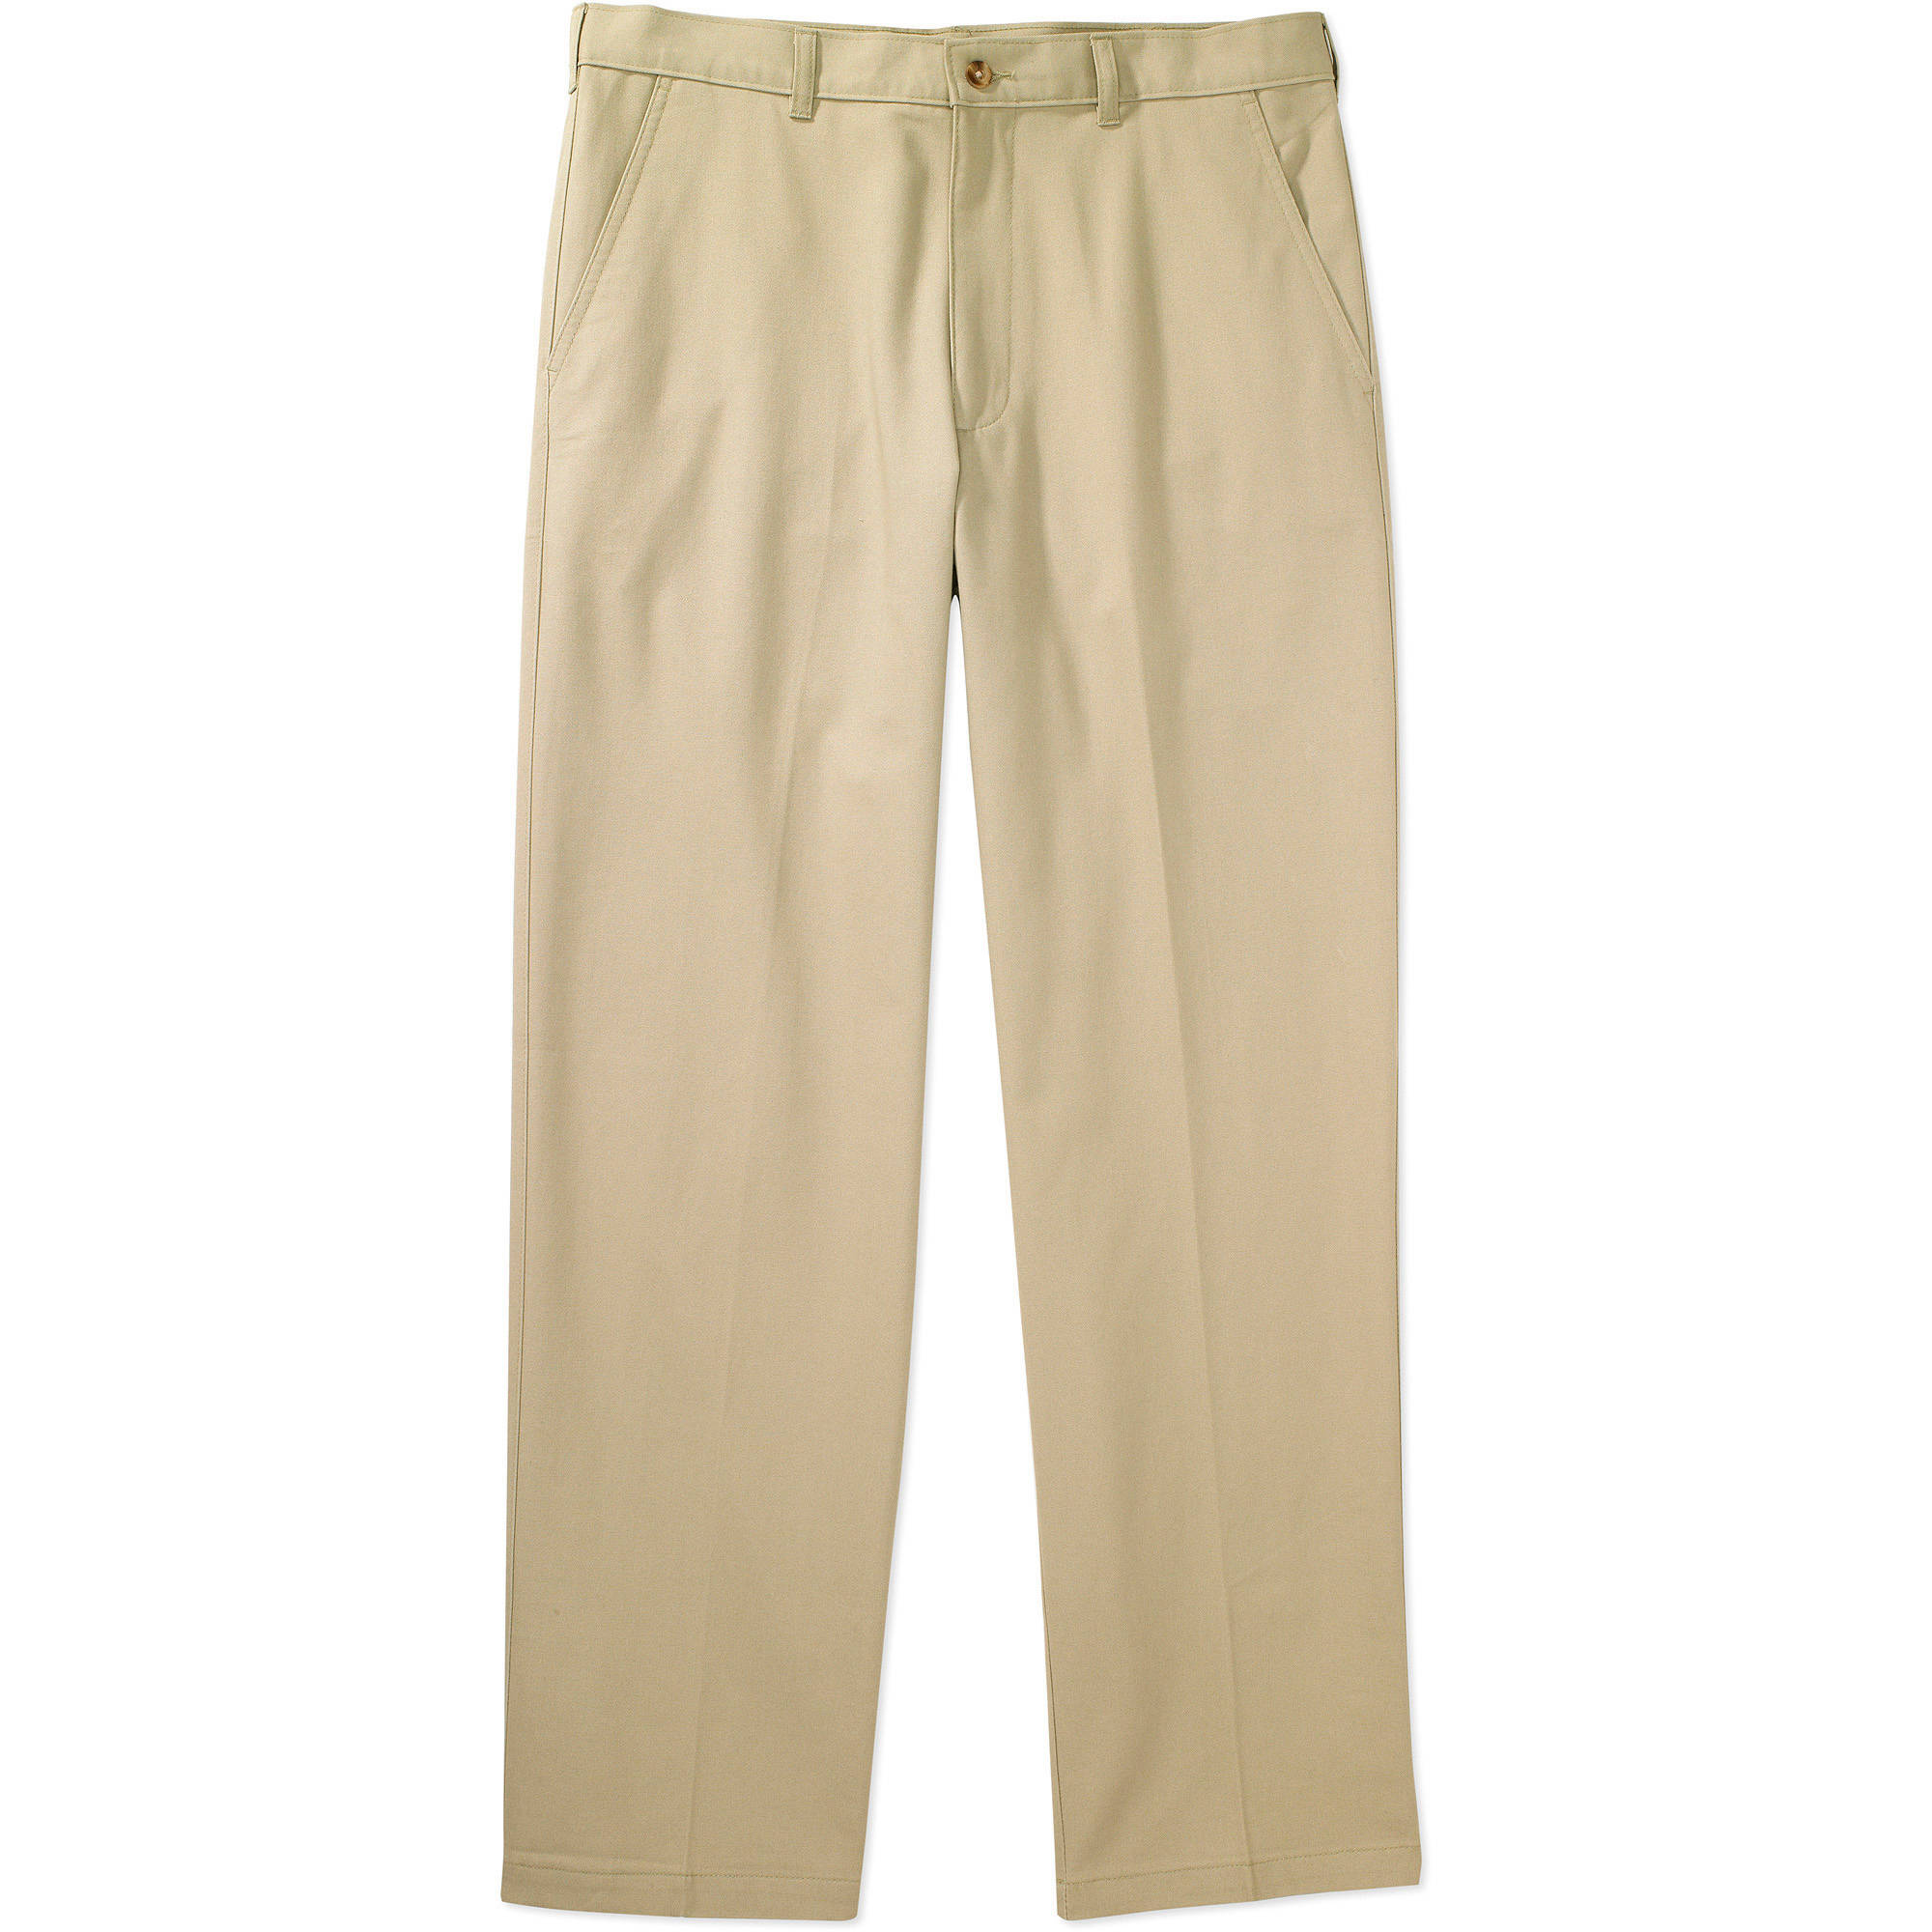 Big Men's Flat Front Wrinkle Resistant Pants - image 1 of 2